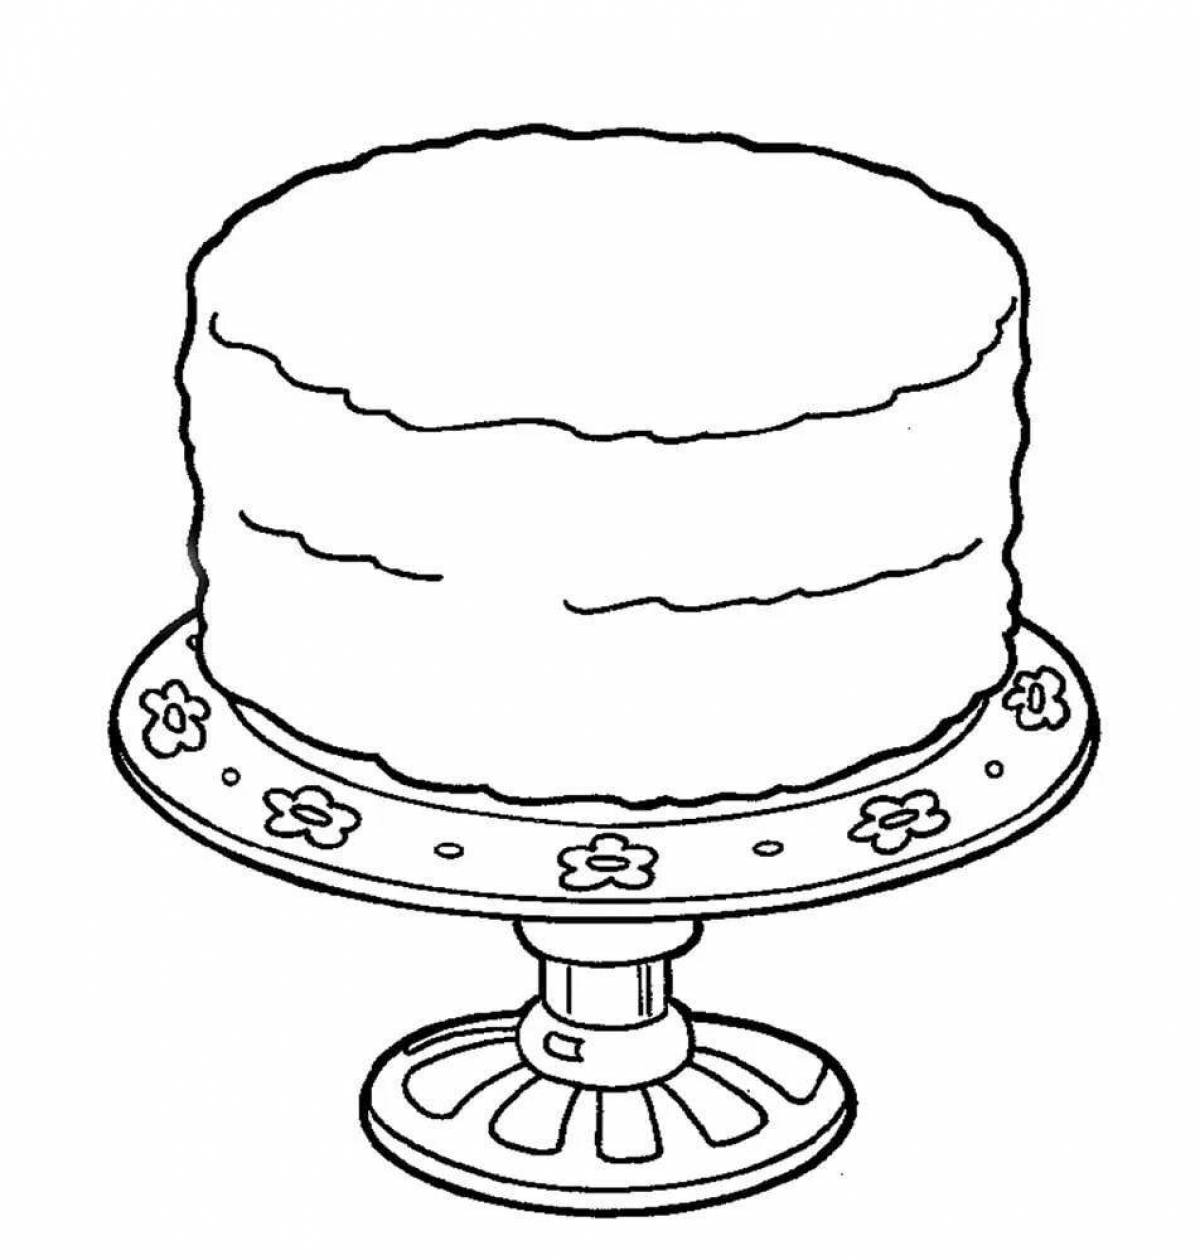 Savory cake drawing page